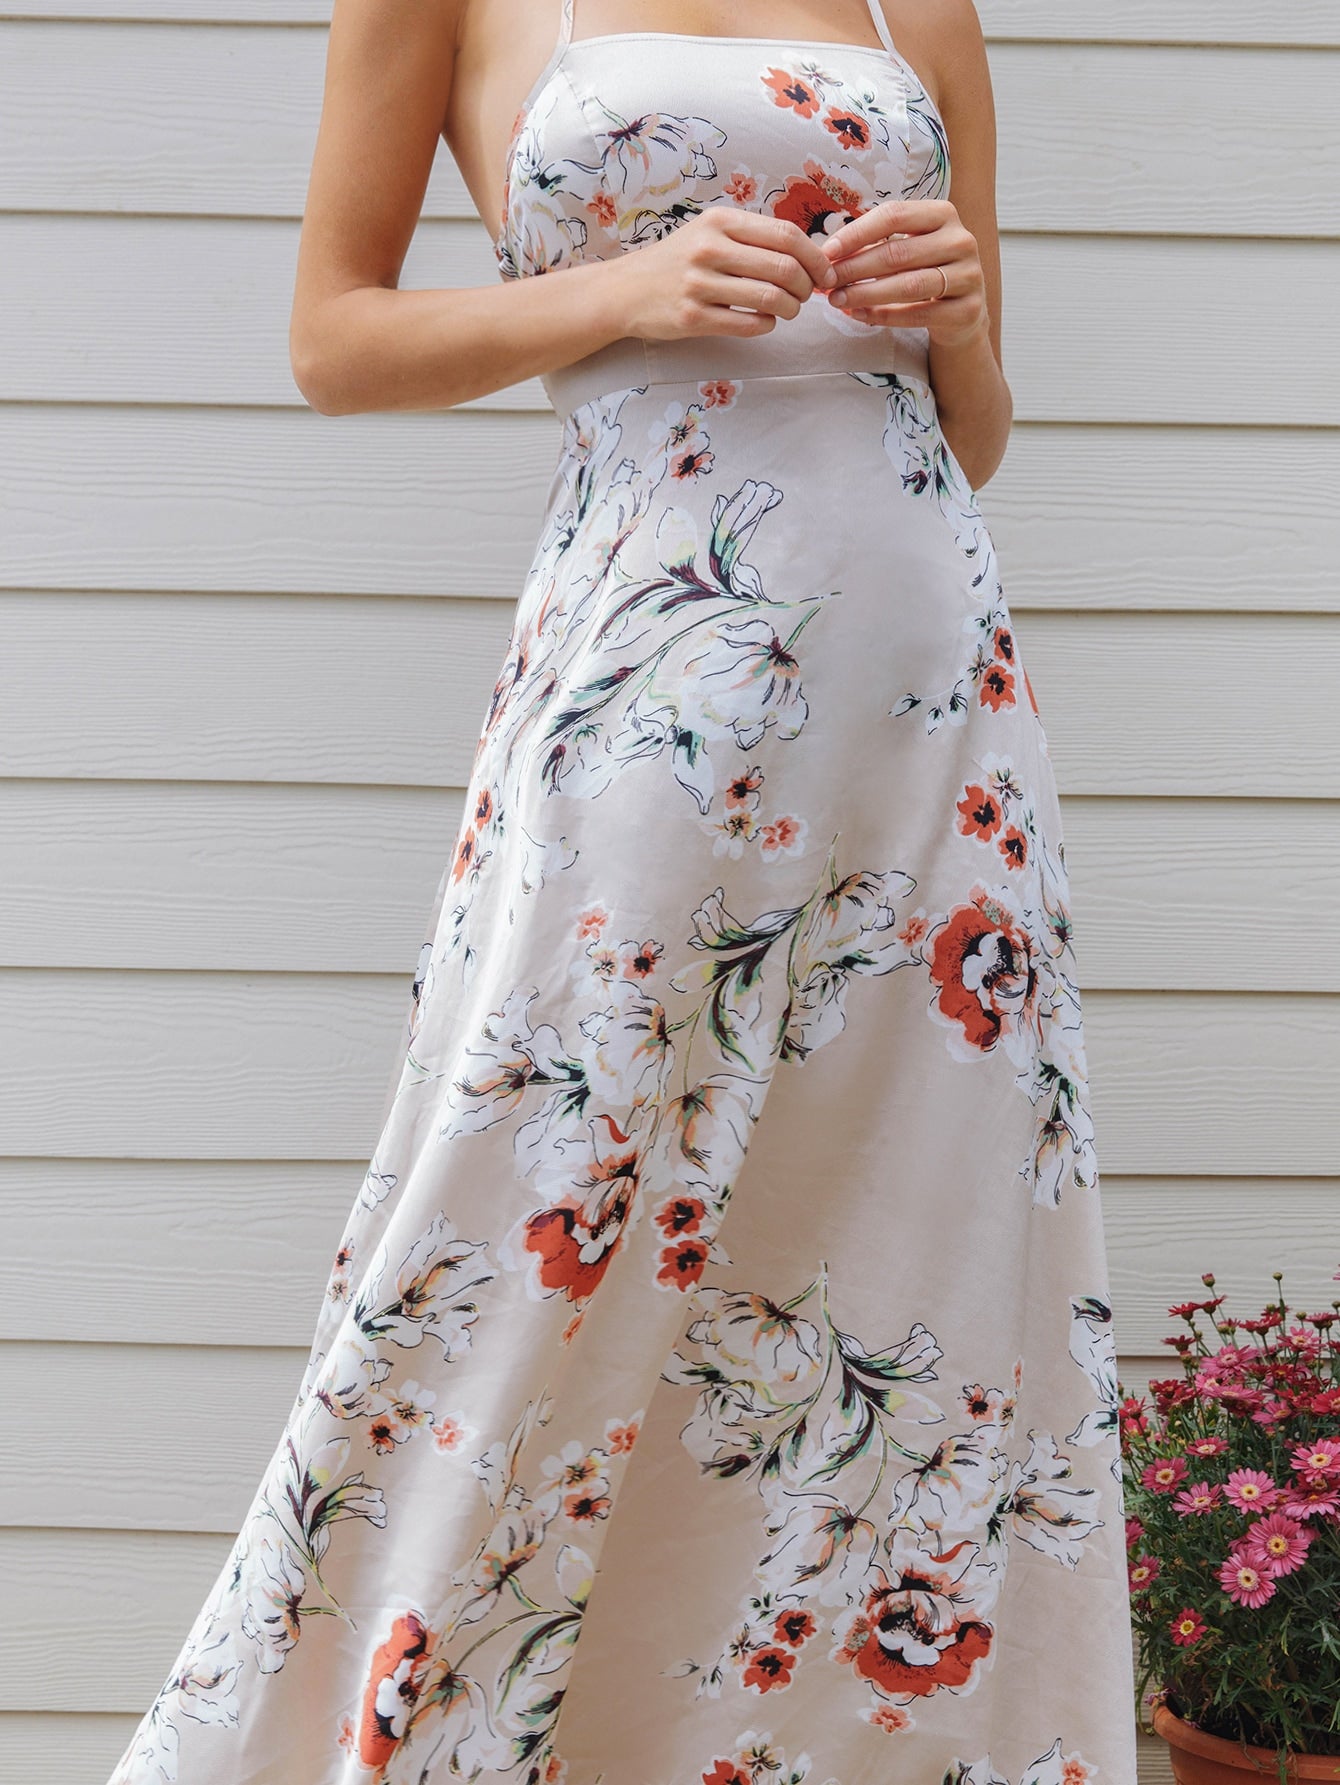 Lace Up Backless Floral Print Slip Dress